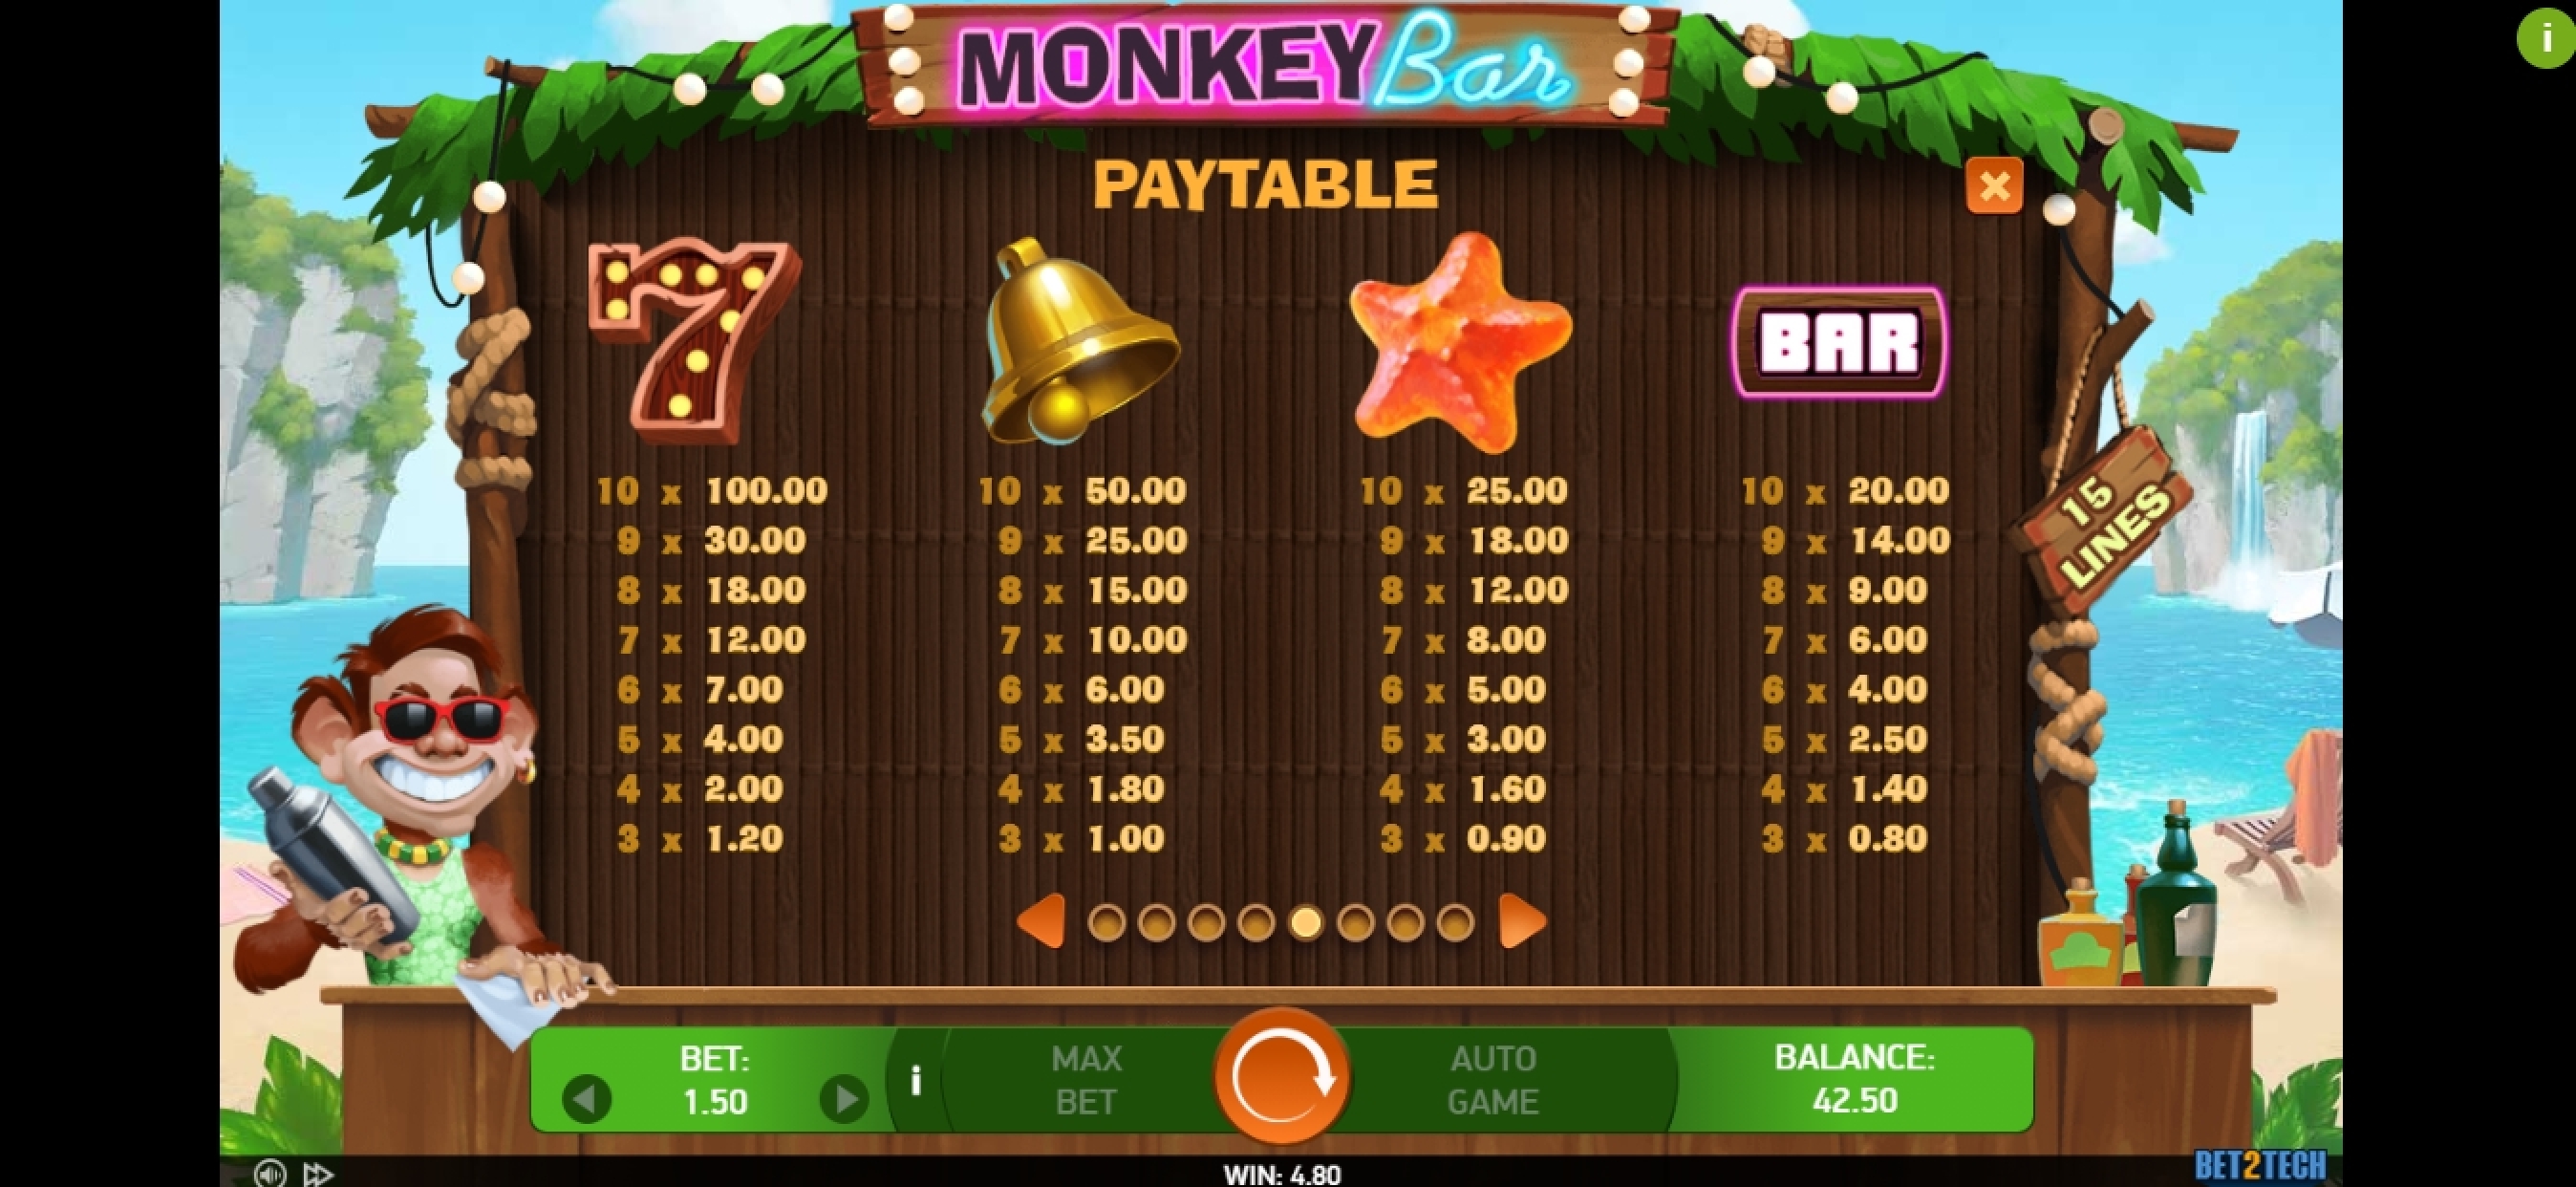 Info of Monkey Bar Slot Game by Bet2Tech